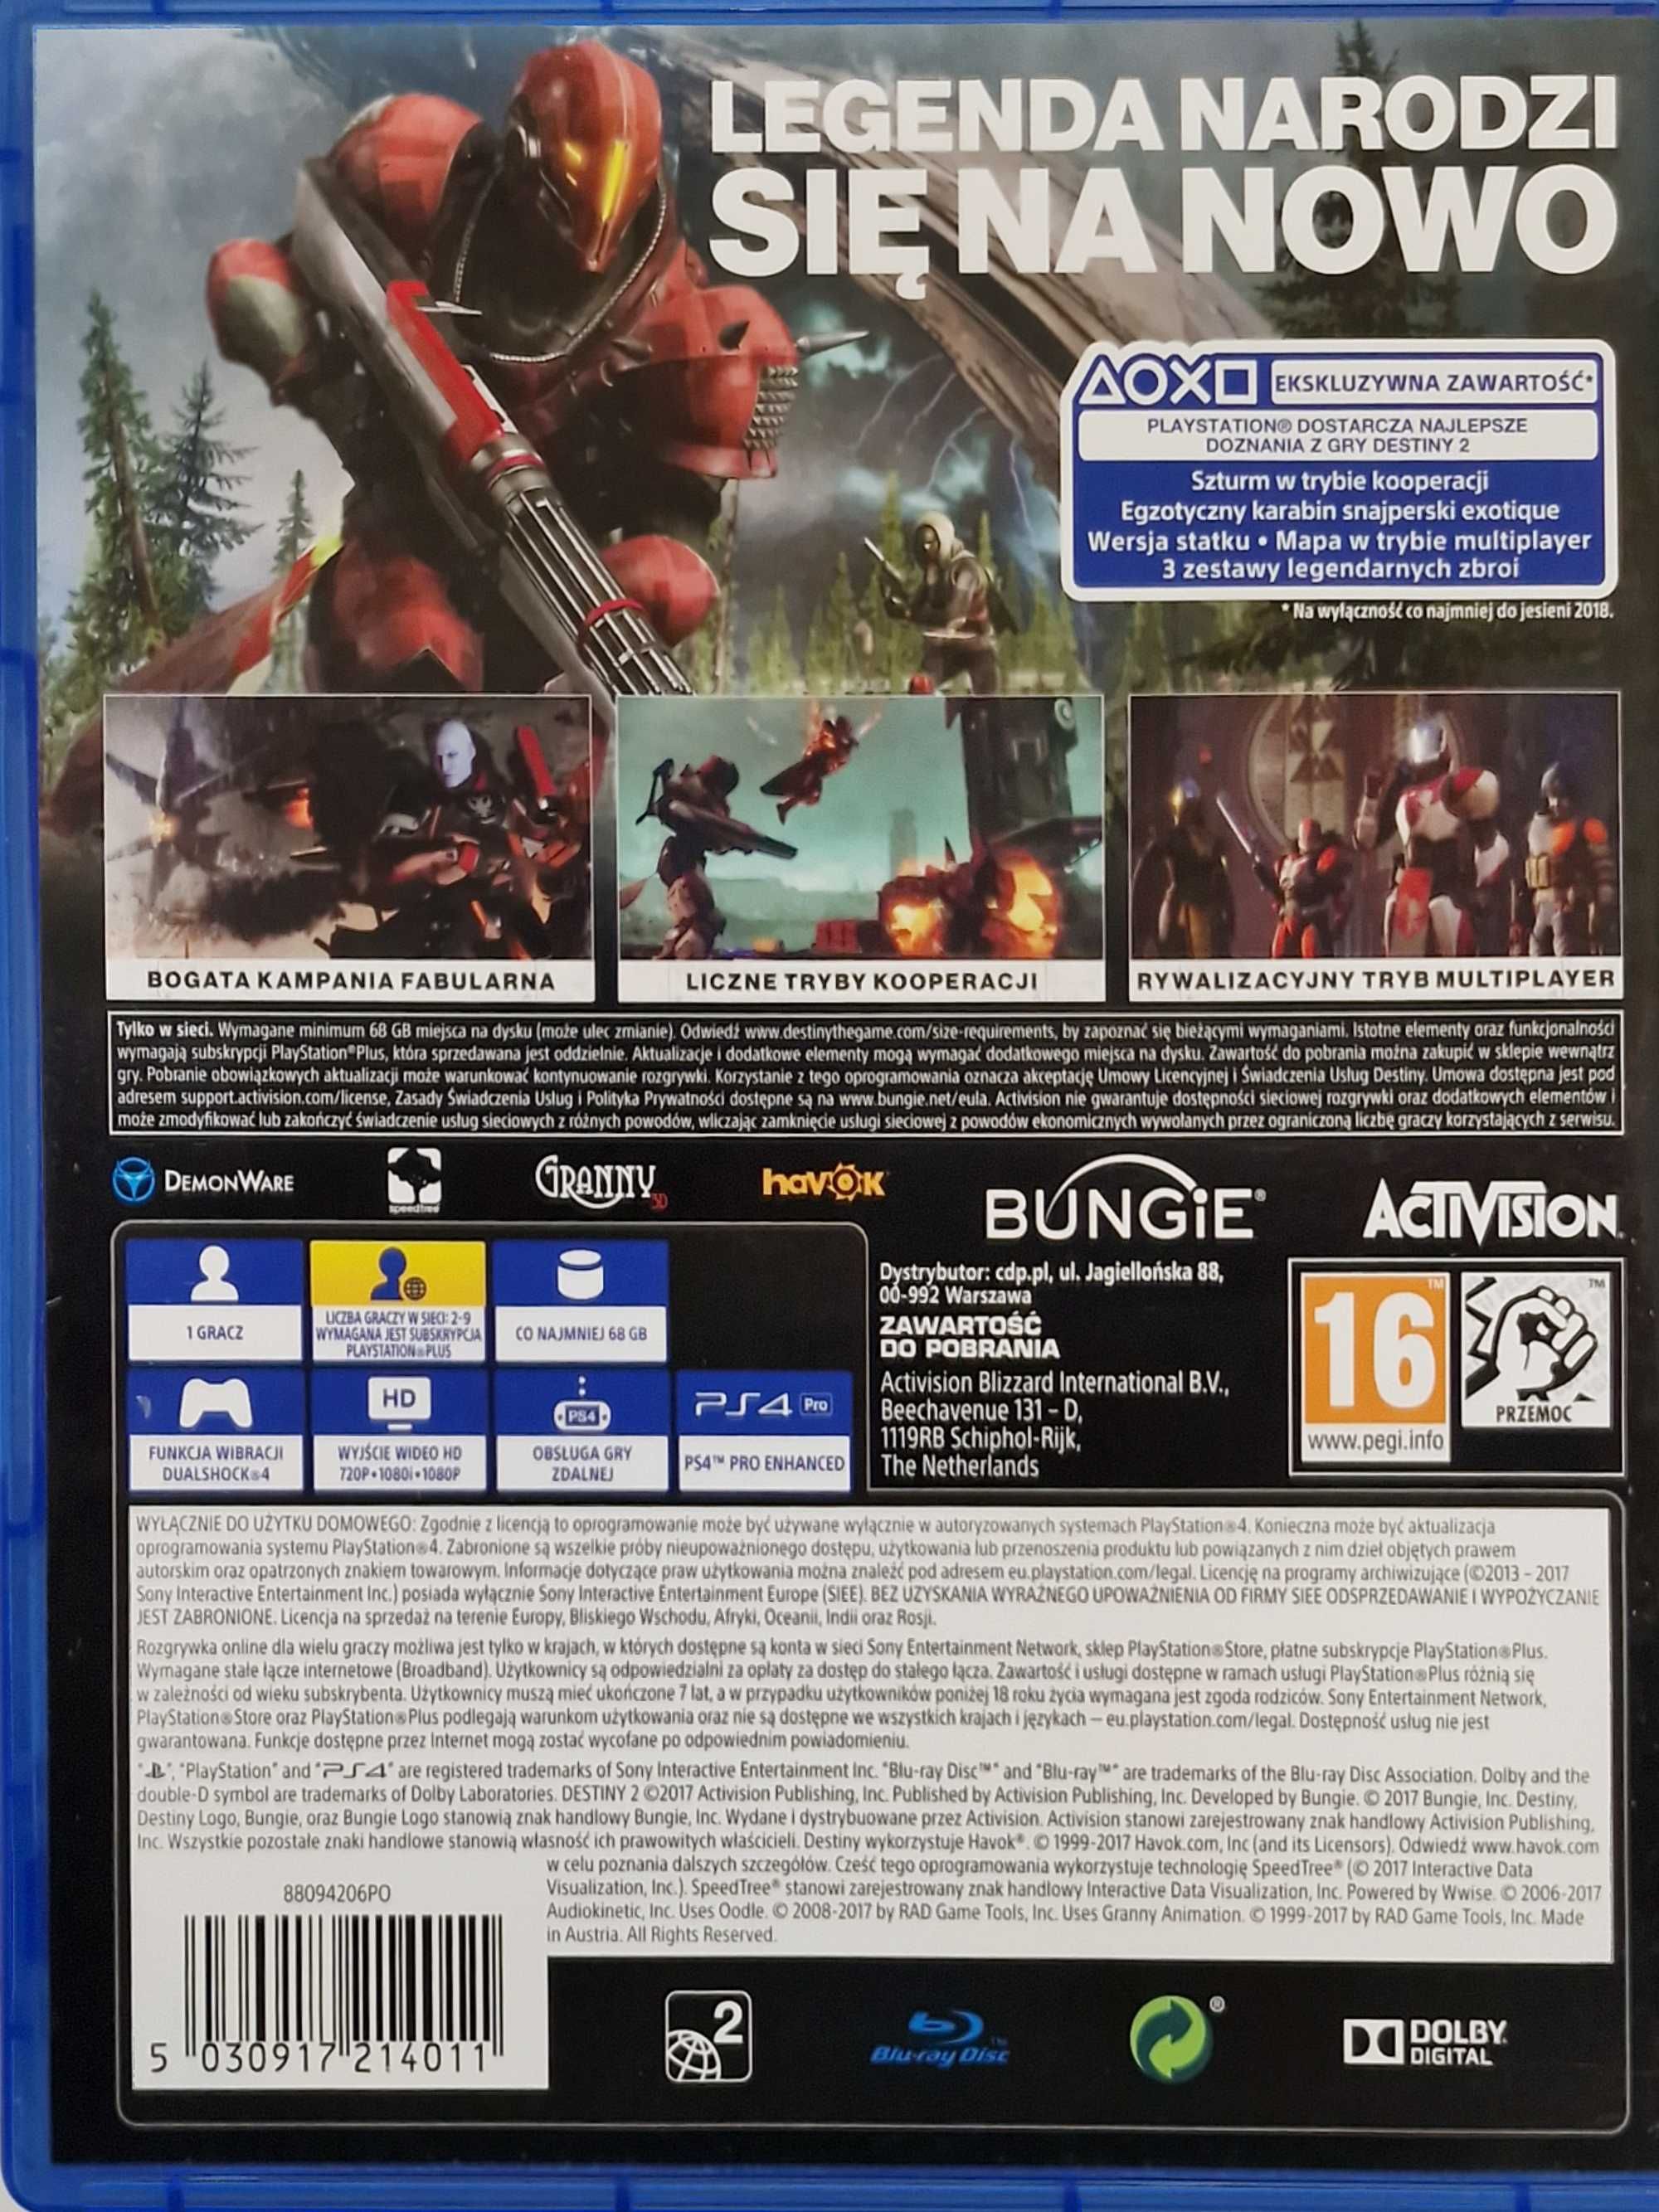 Destiny 2 - Playstation 4